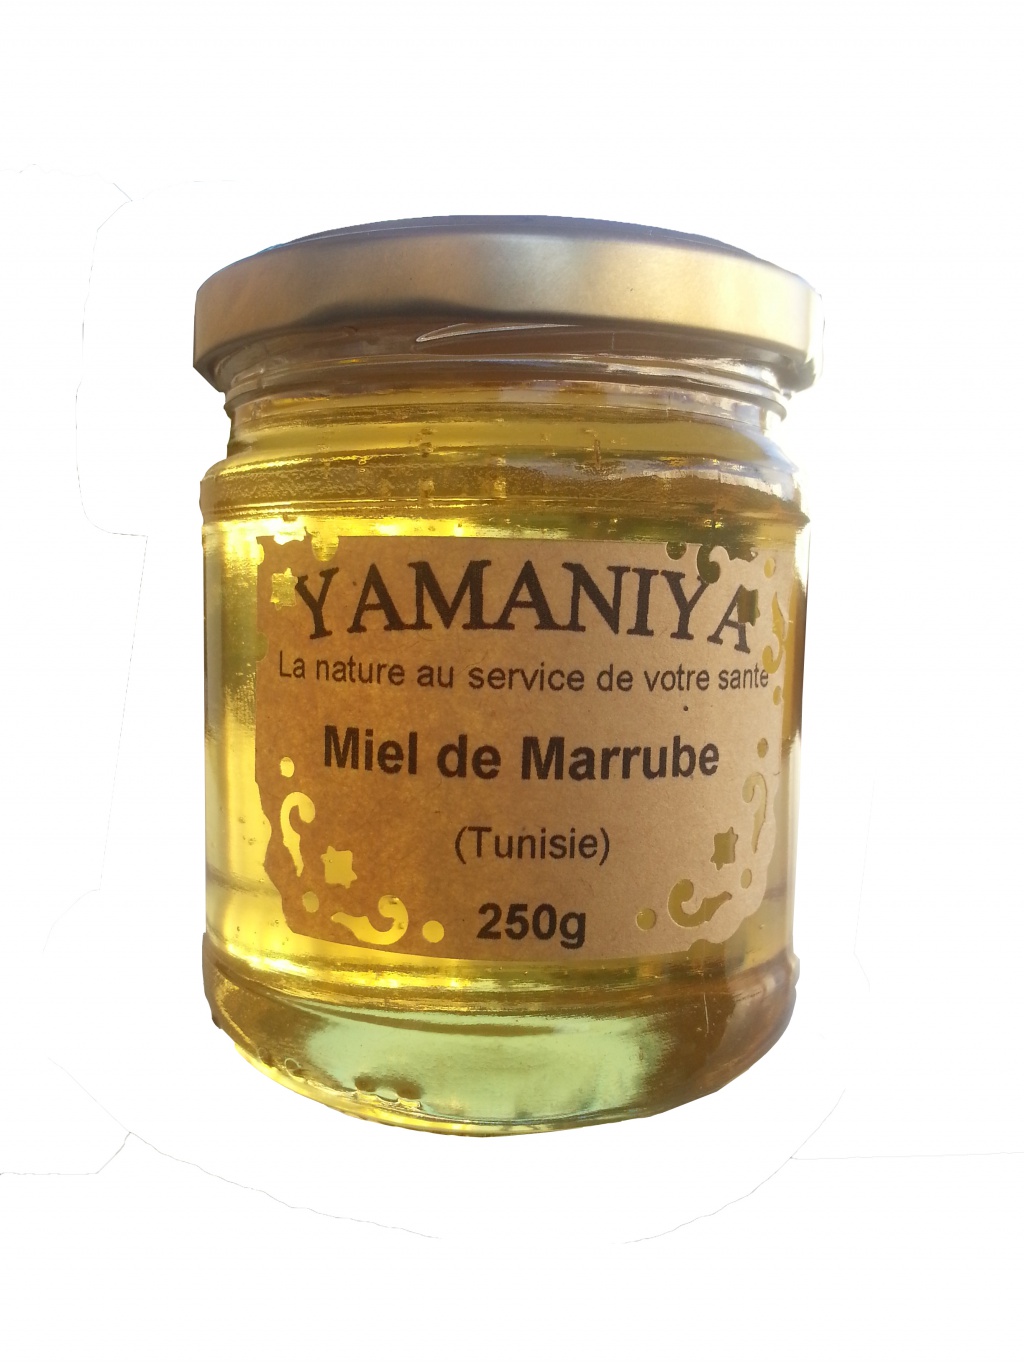 Miel de jujubier Yémen, miel d'eucalyptus/thym, miel de Marrube blanc ....